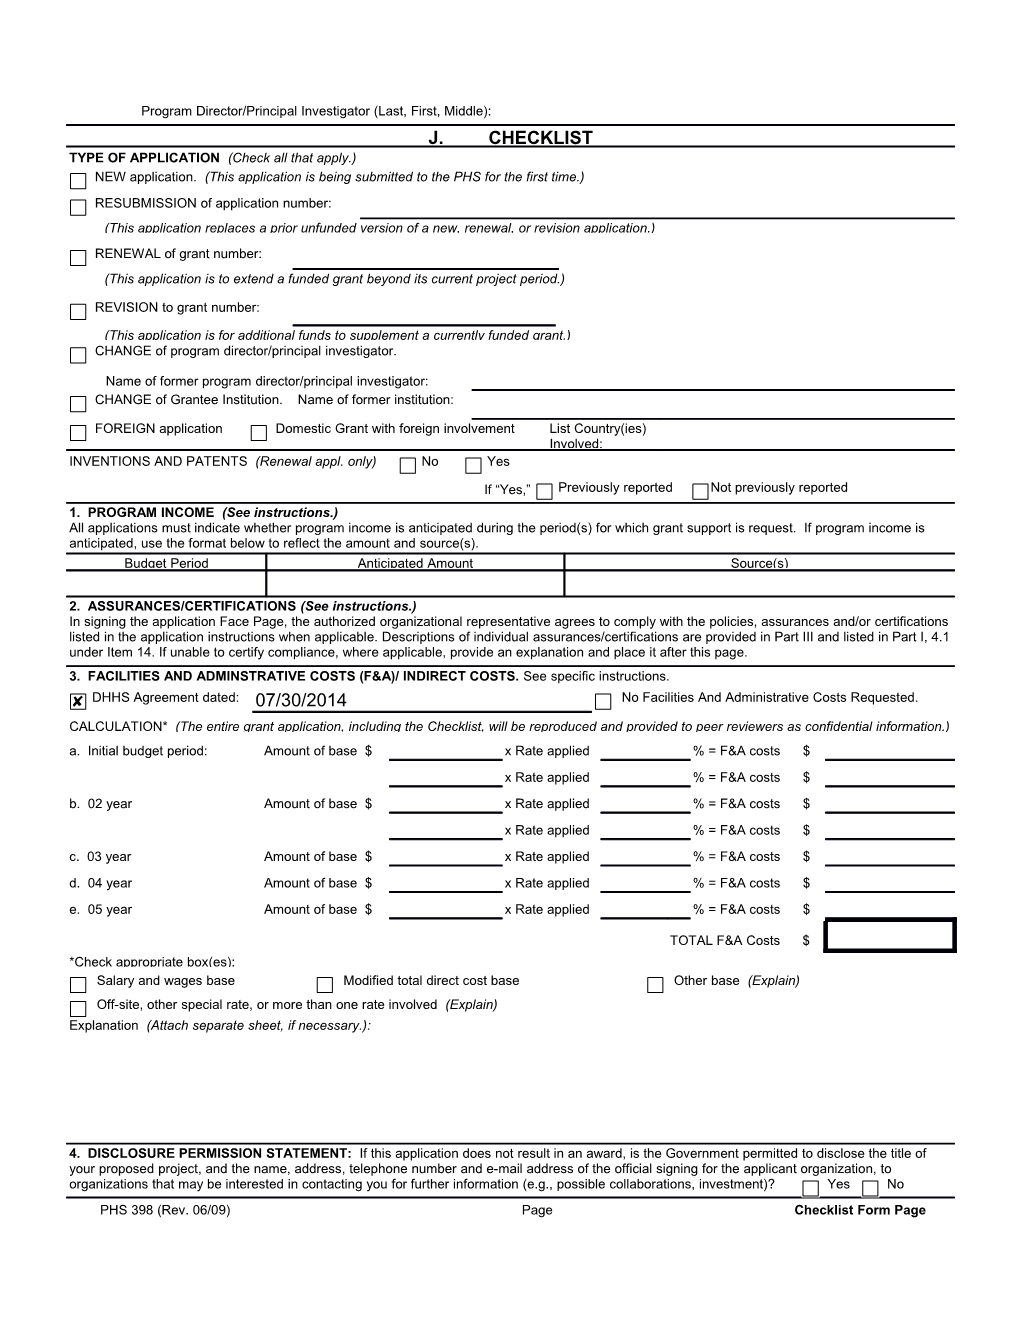 PHS 398 (Rev. 11/07), Checklist Form Page